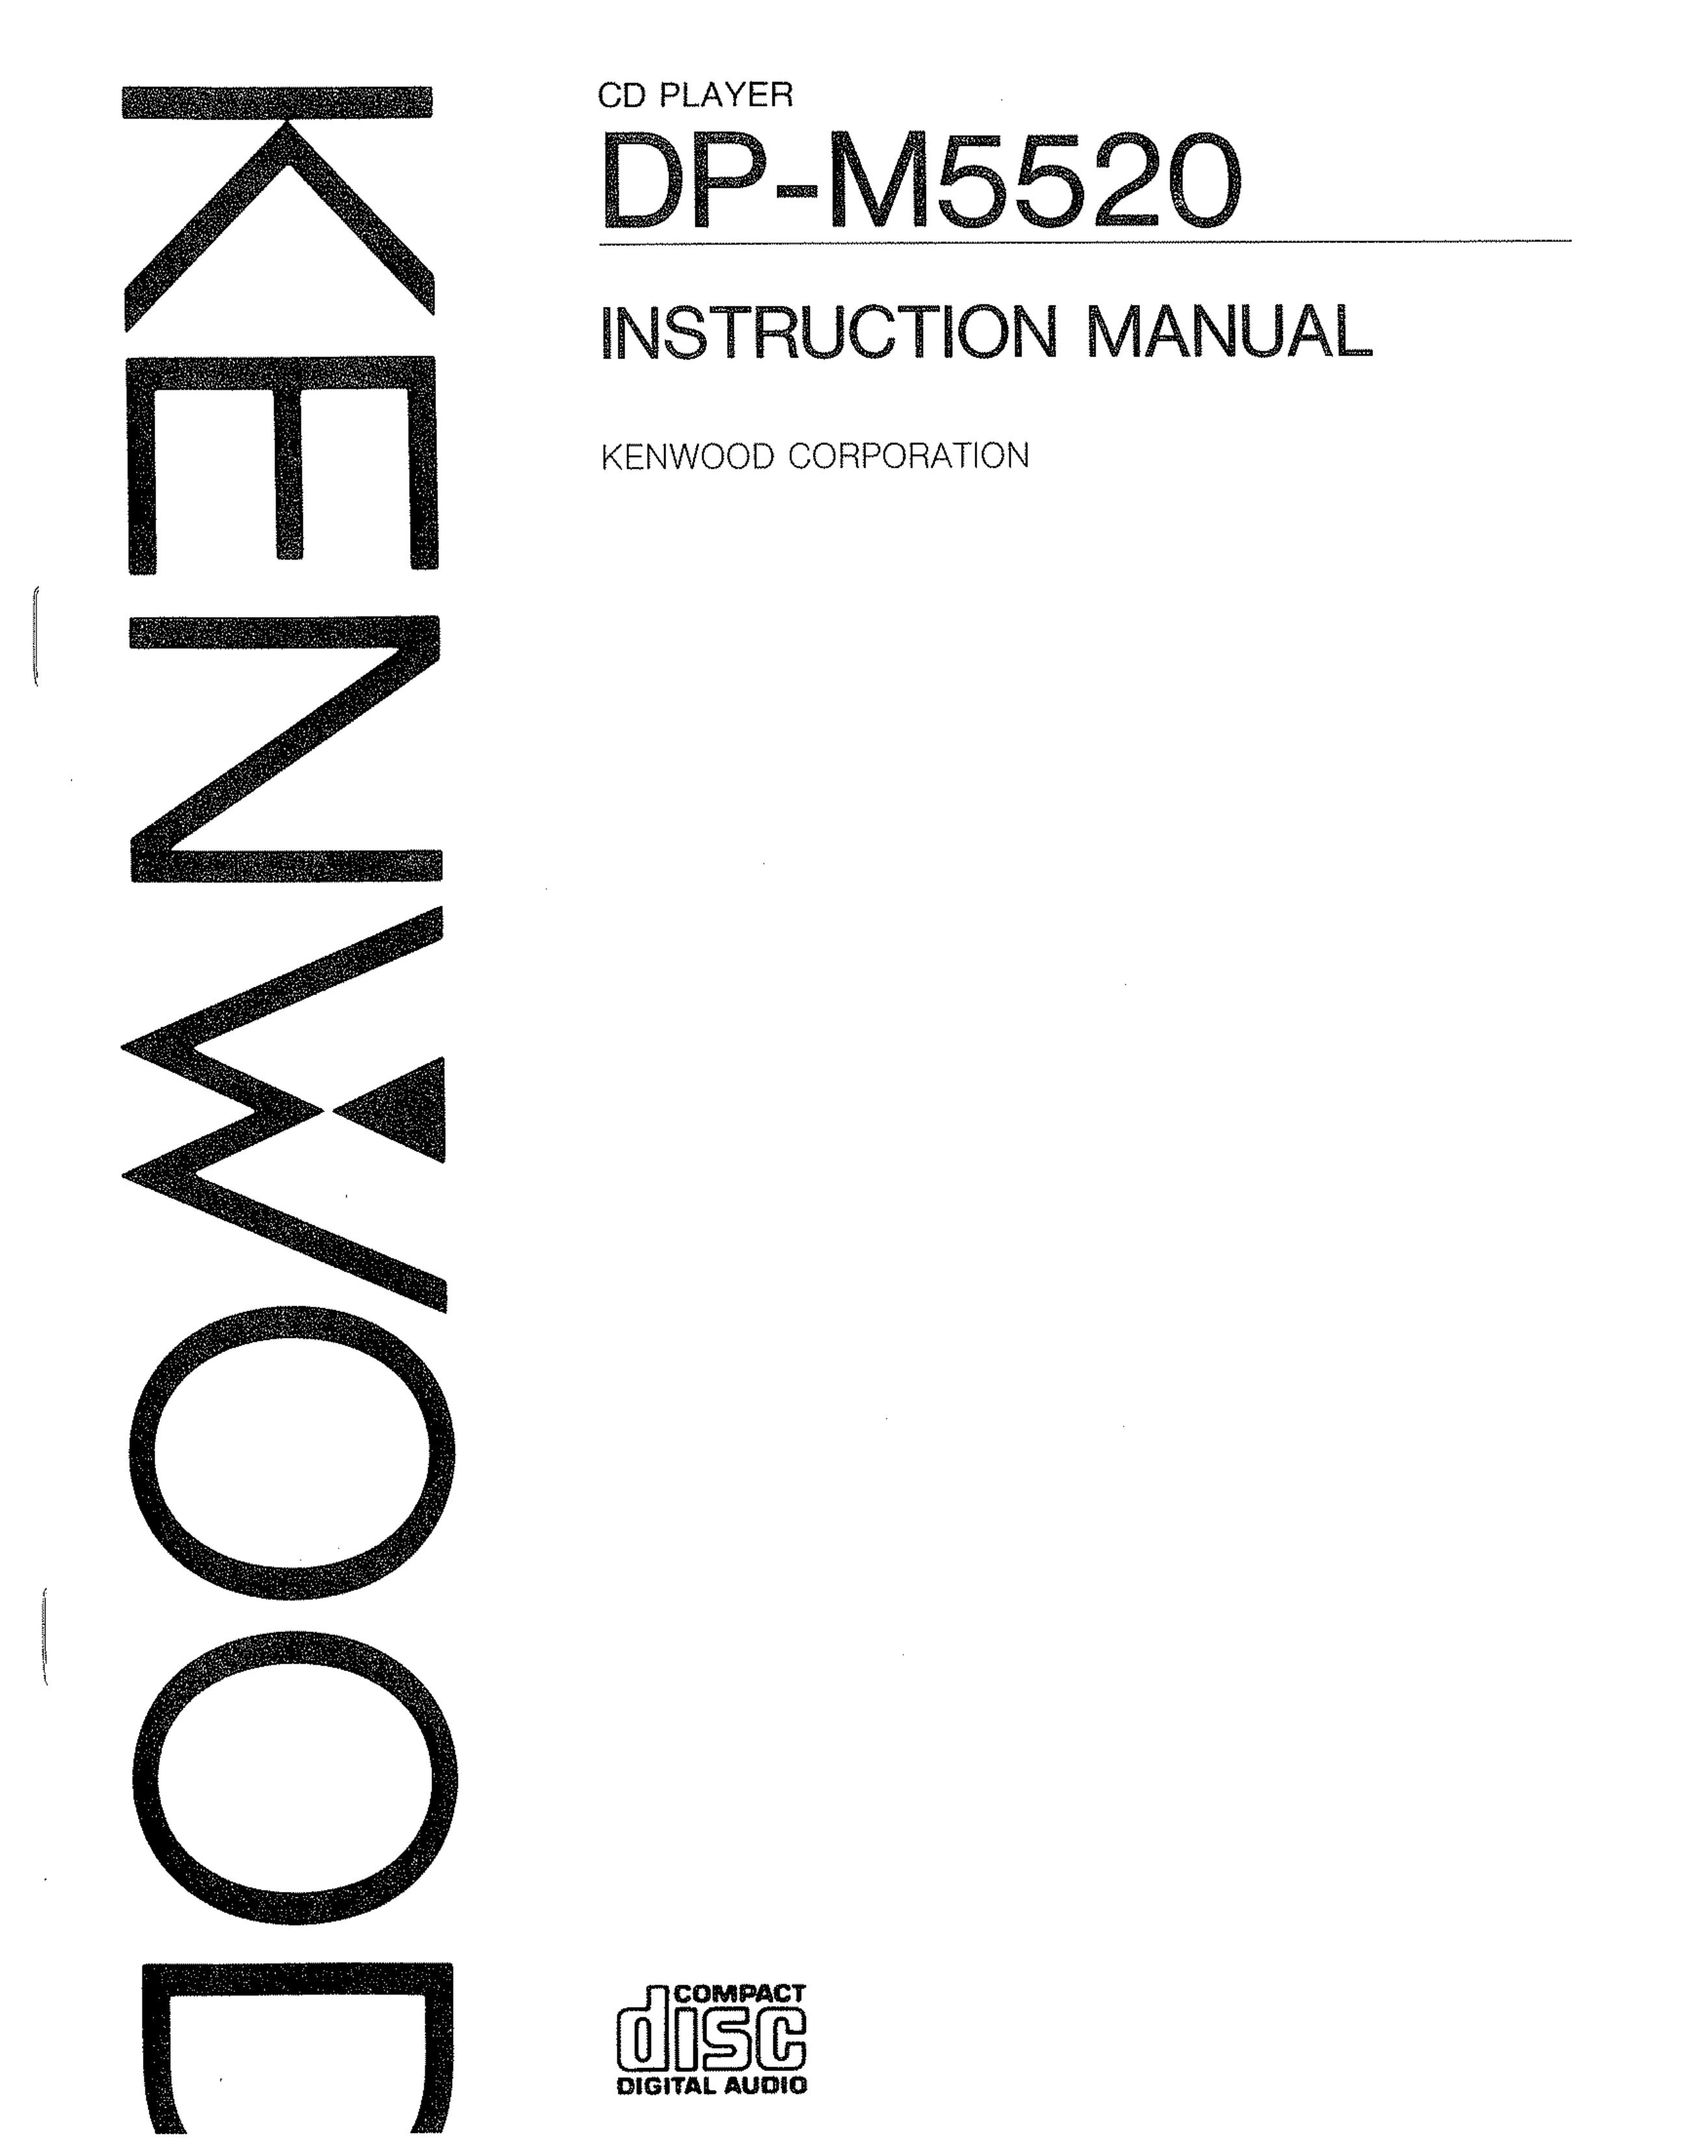 Kenwood DP-M5520 CD Player User Manual